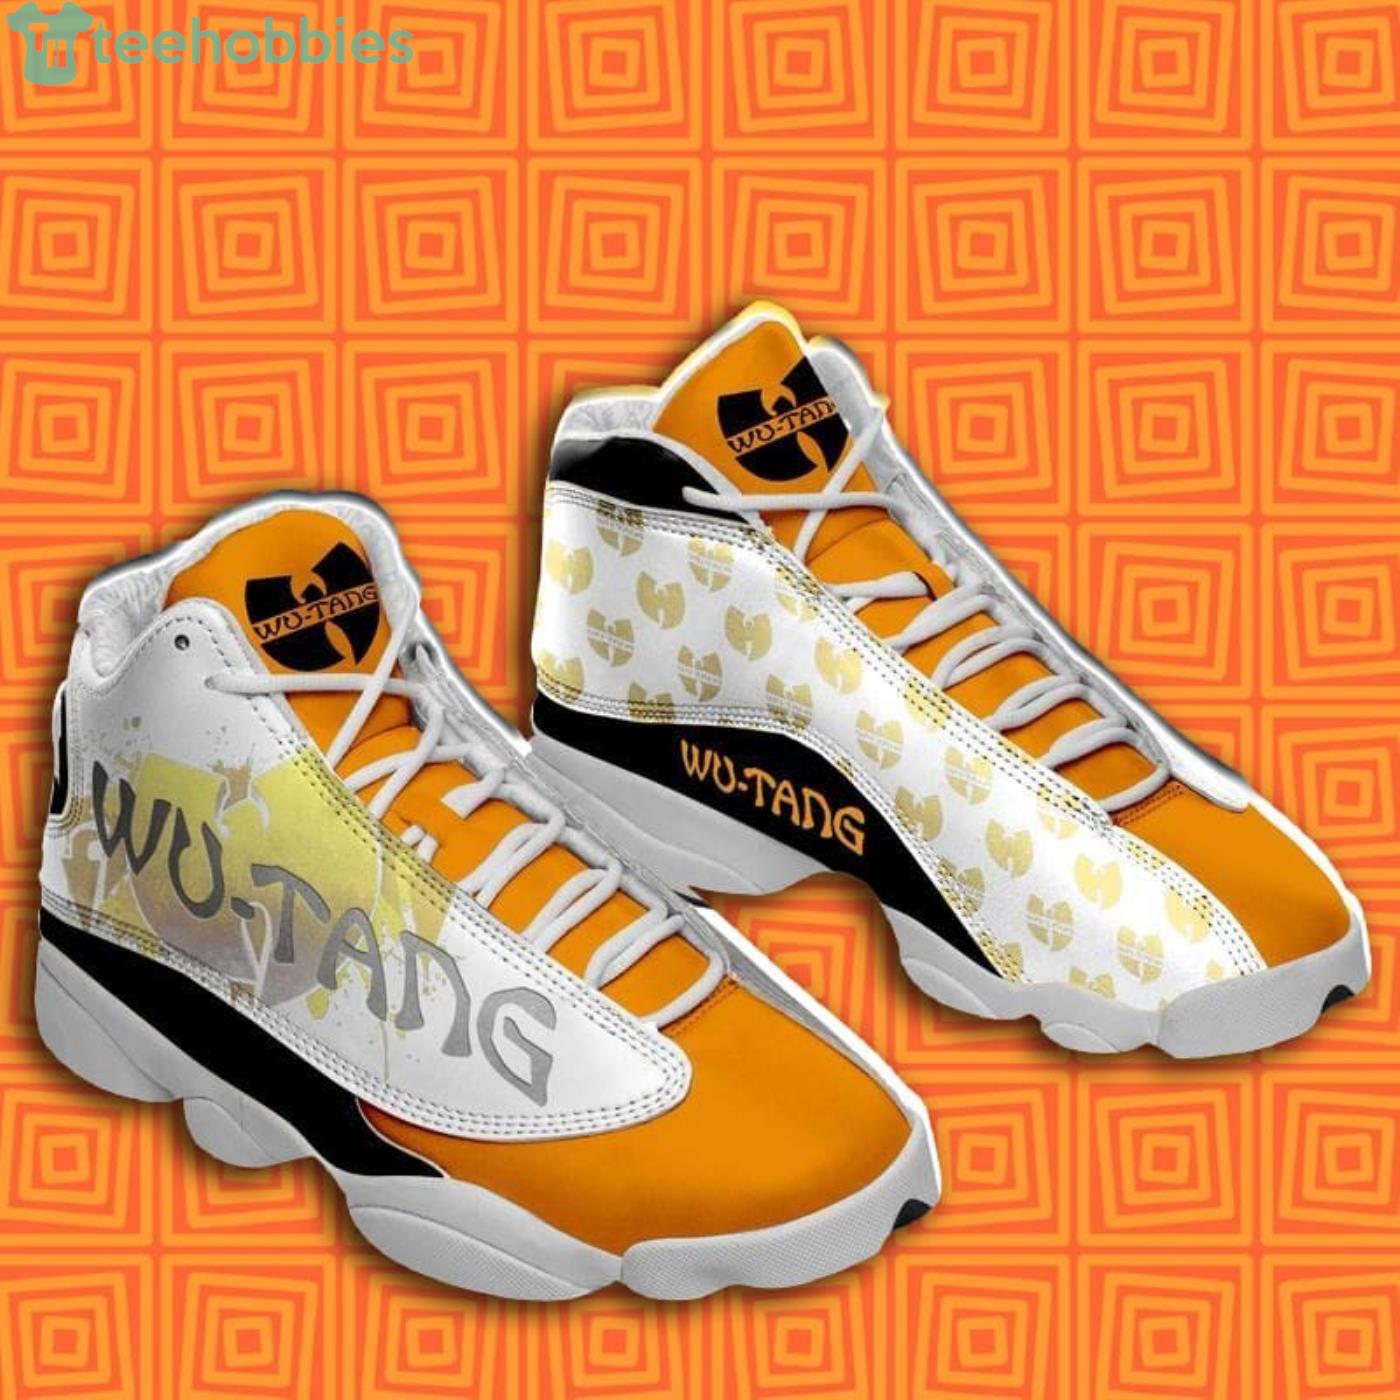 https://image.teehobbies.us/2022/08/wu-tang-clan-logo-pattern-air-jordan-13-sneaker-shoes.jpg